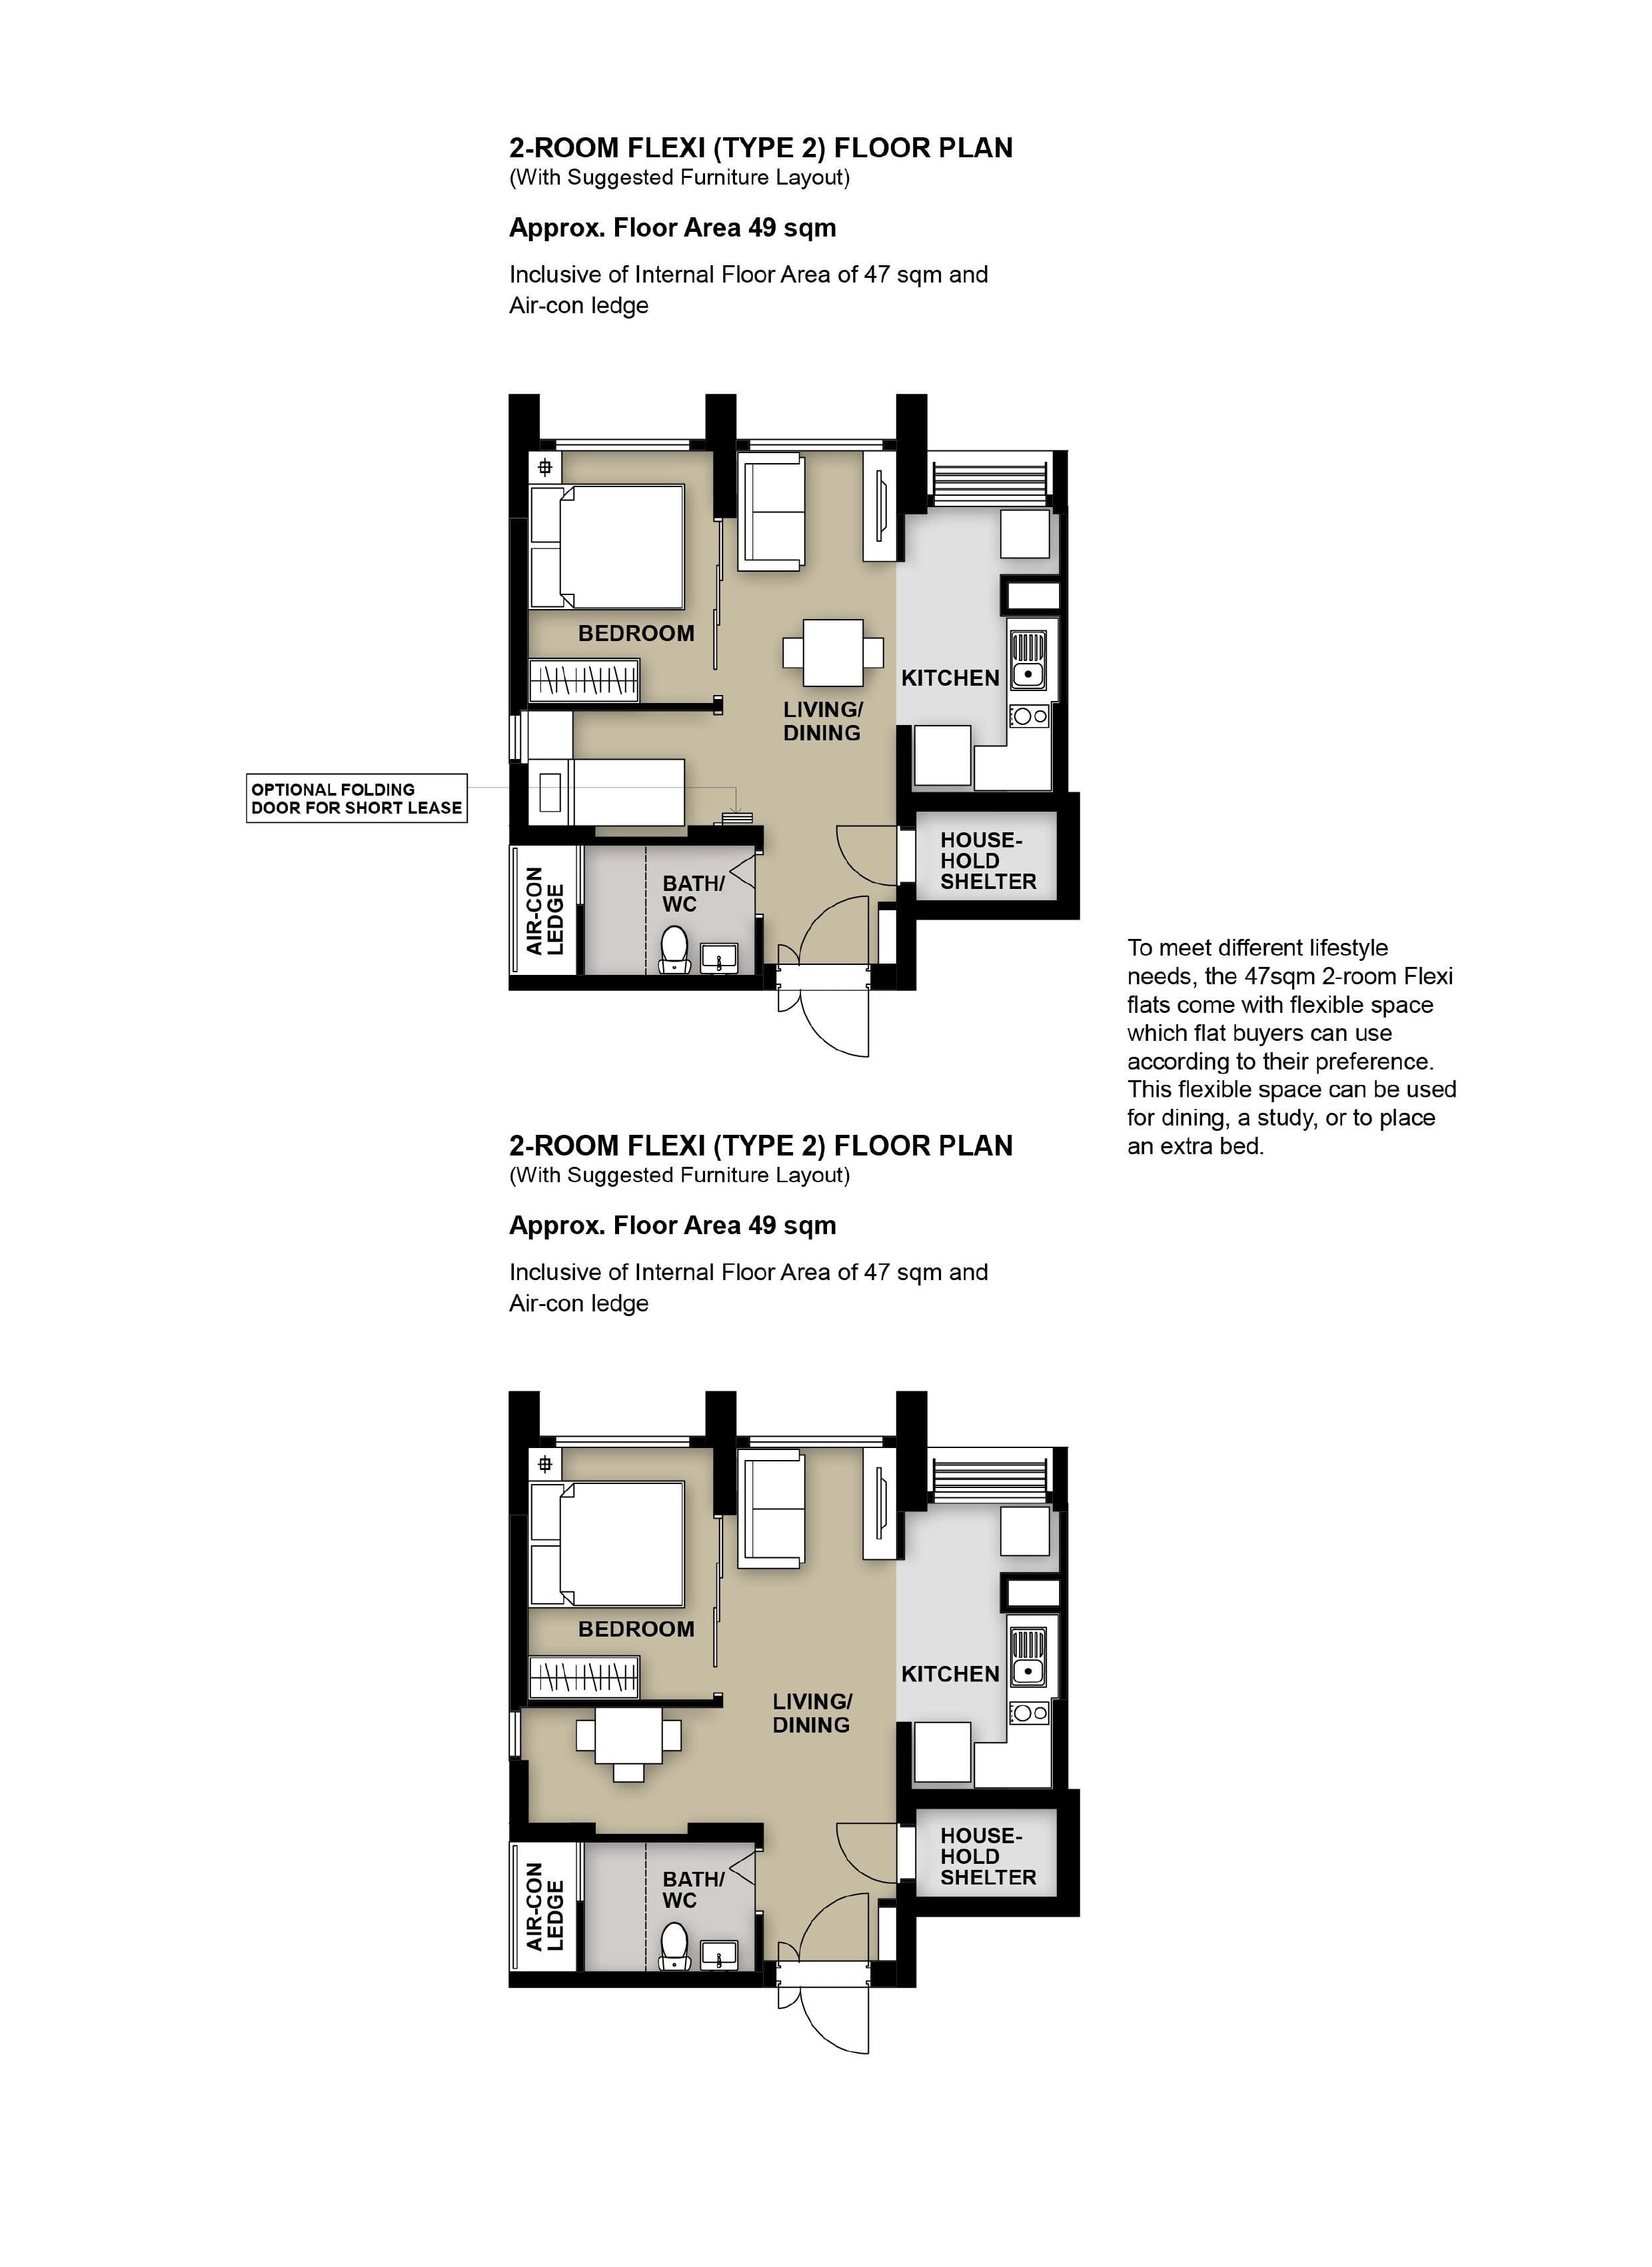 Keat Hong Grange 2 Room Flexi Type 2 Floor Plan